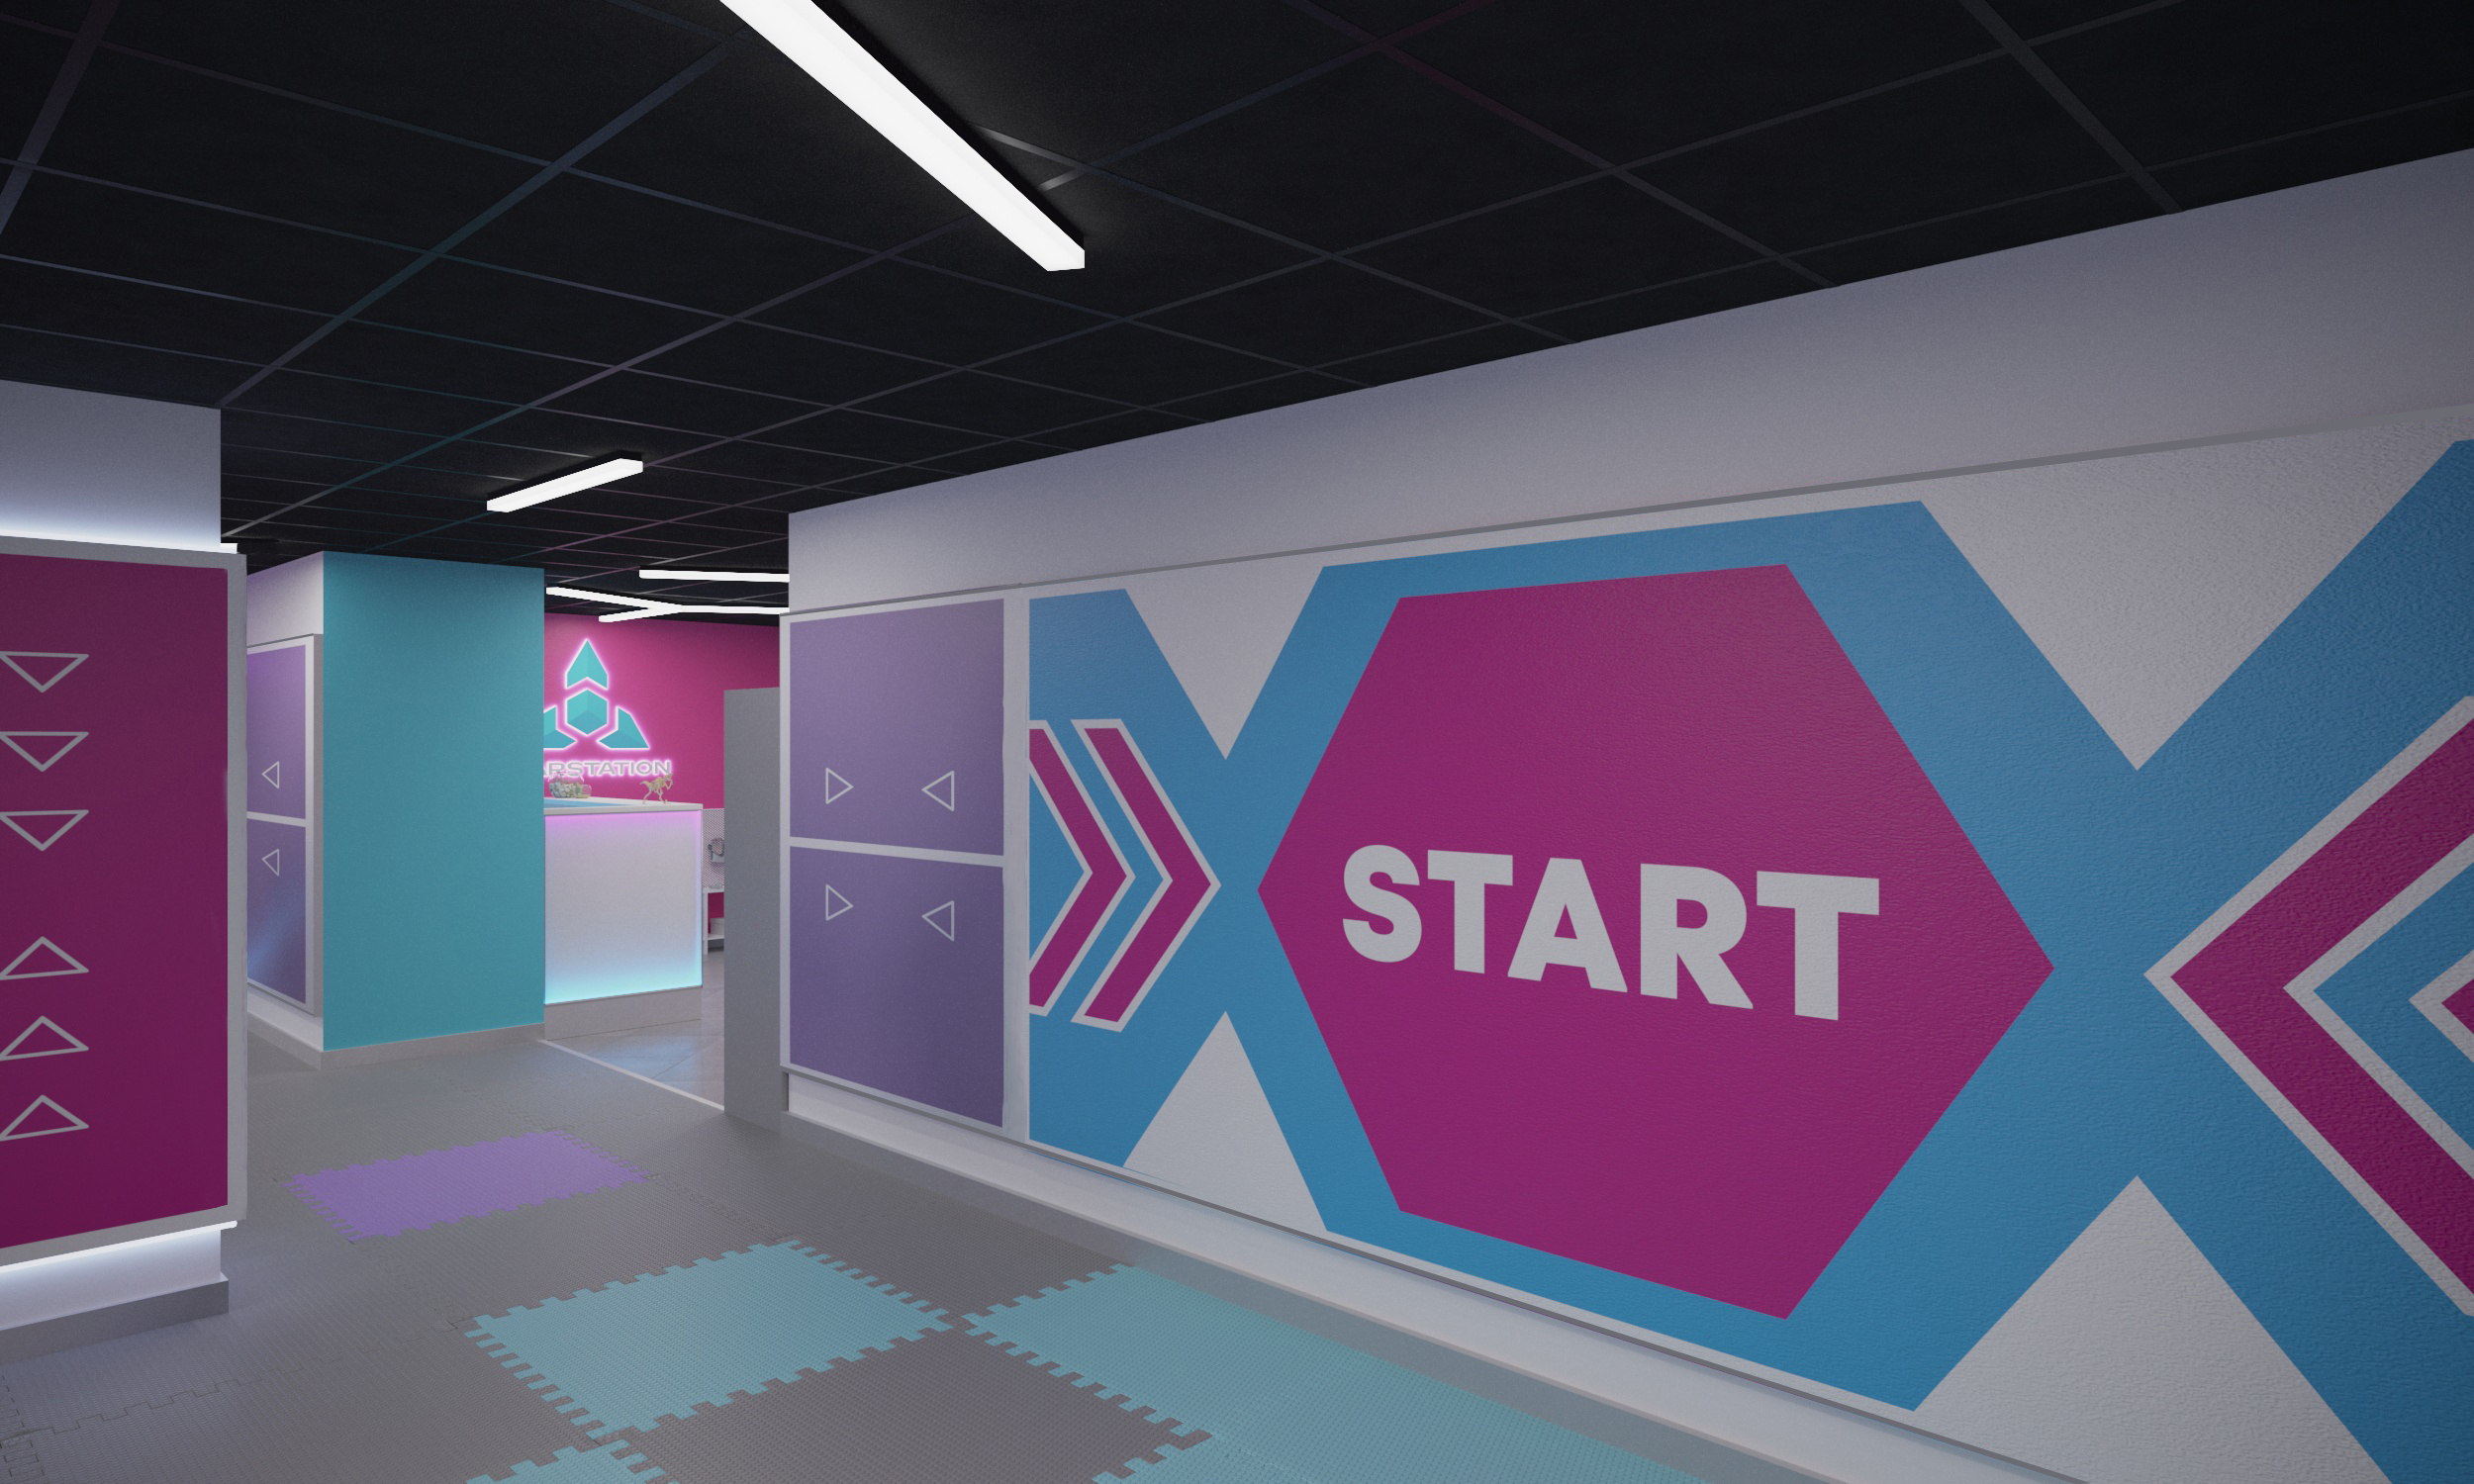 VR arena design project for customer’s premises photo 9